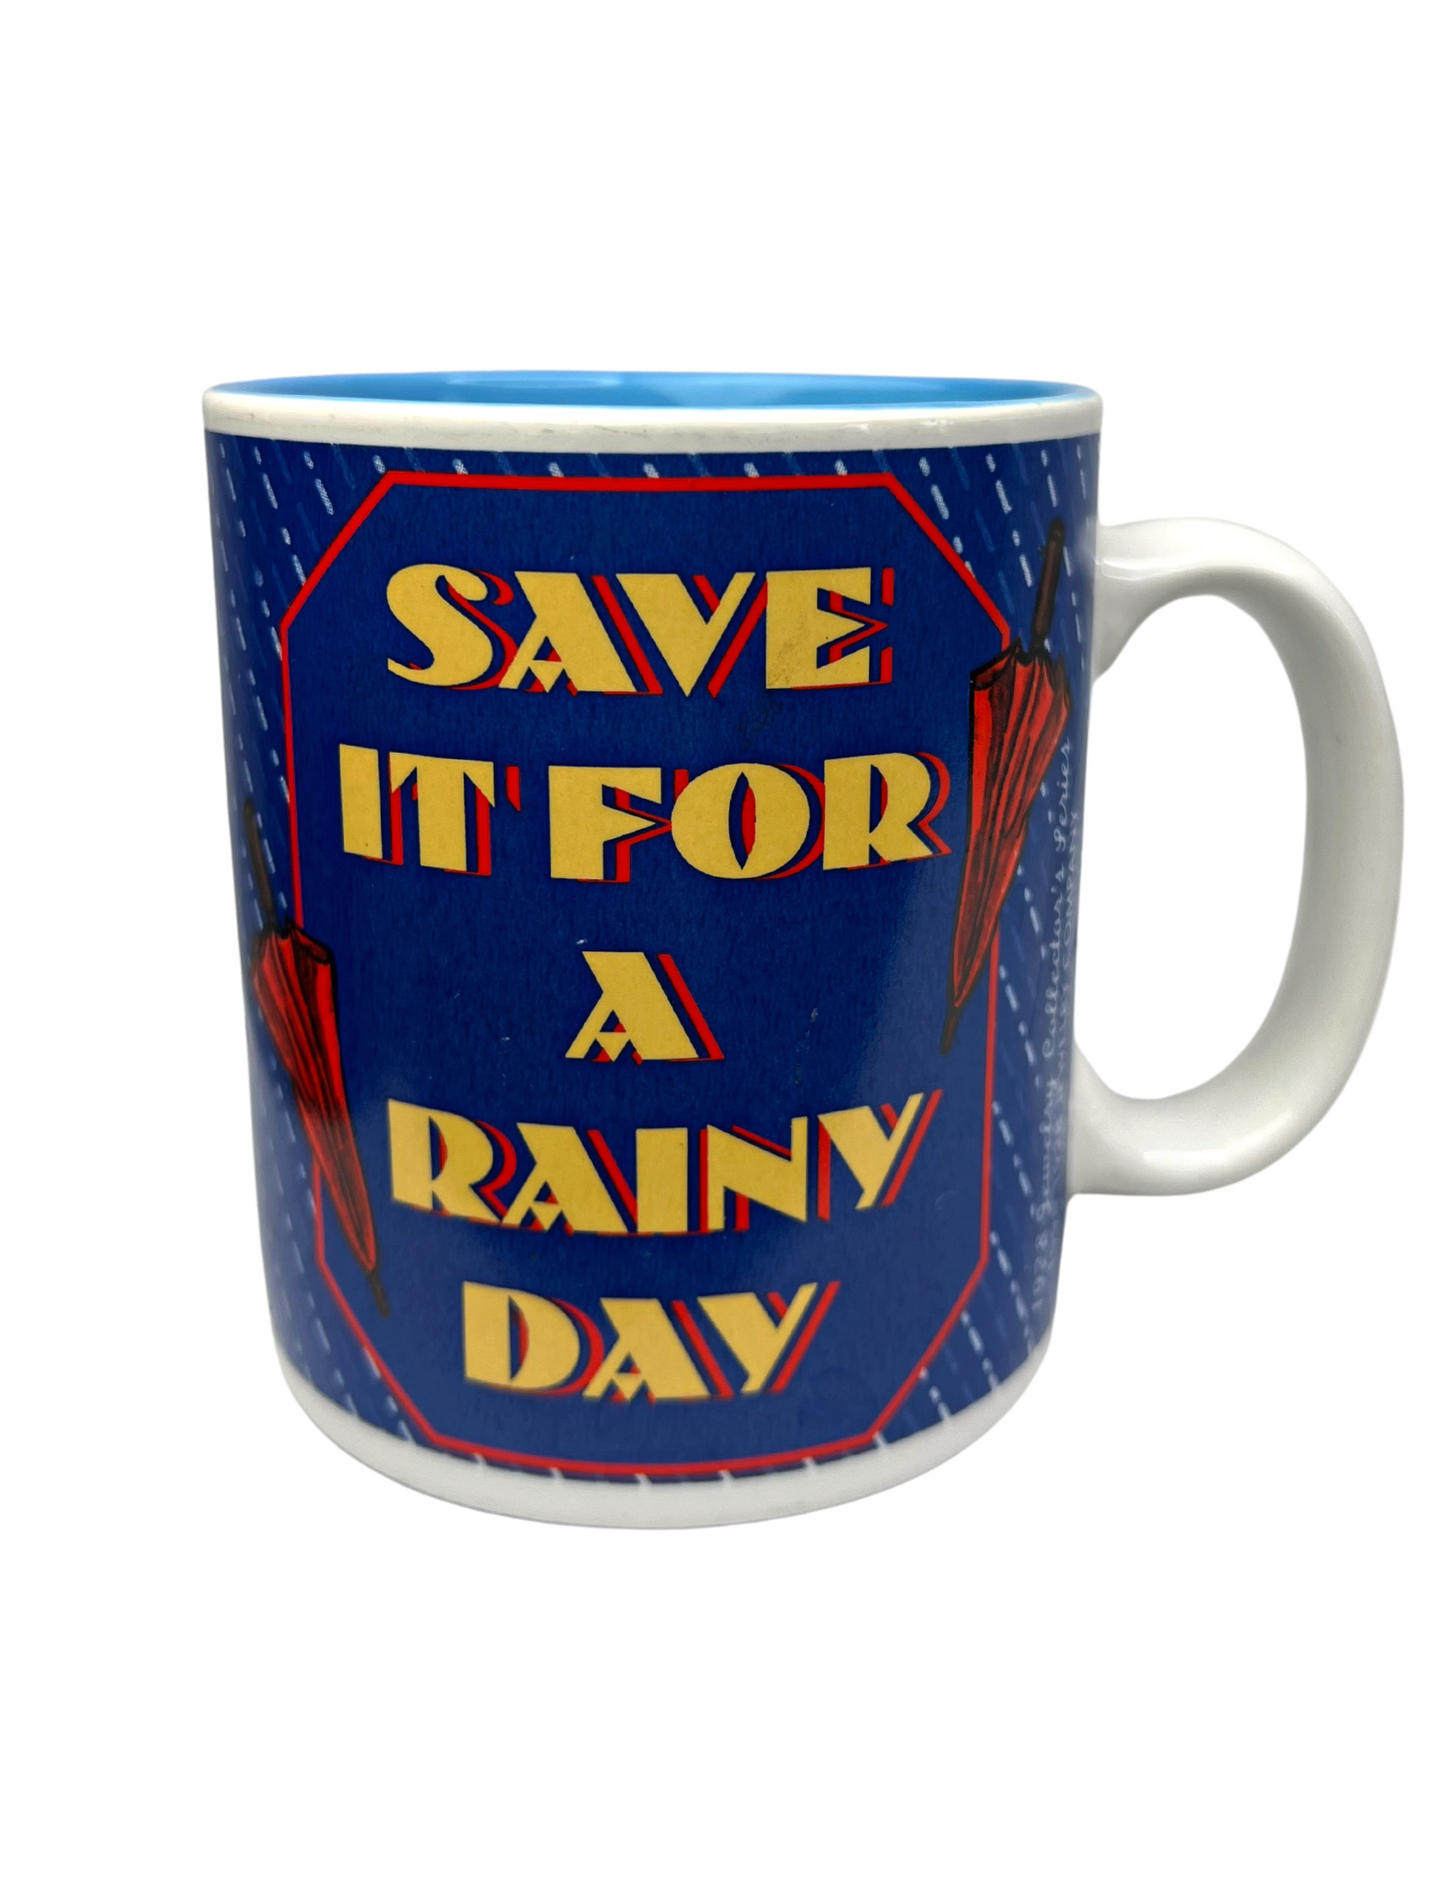 Vintage ‘95 1928 Jewelry Company Save It For A Rainy Day Coffee Mug